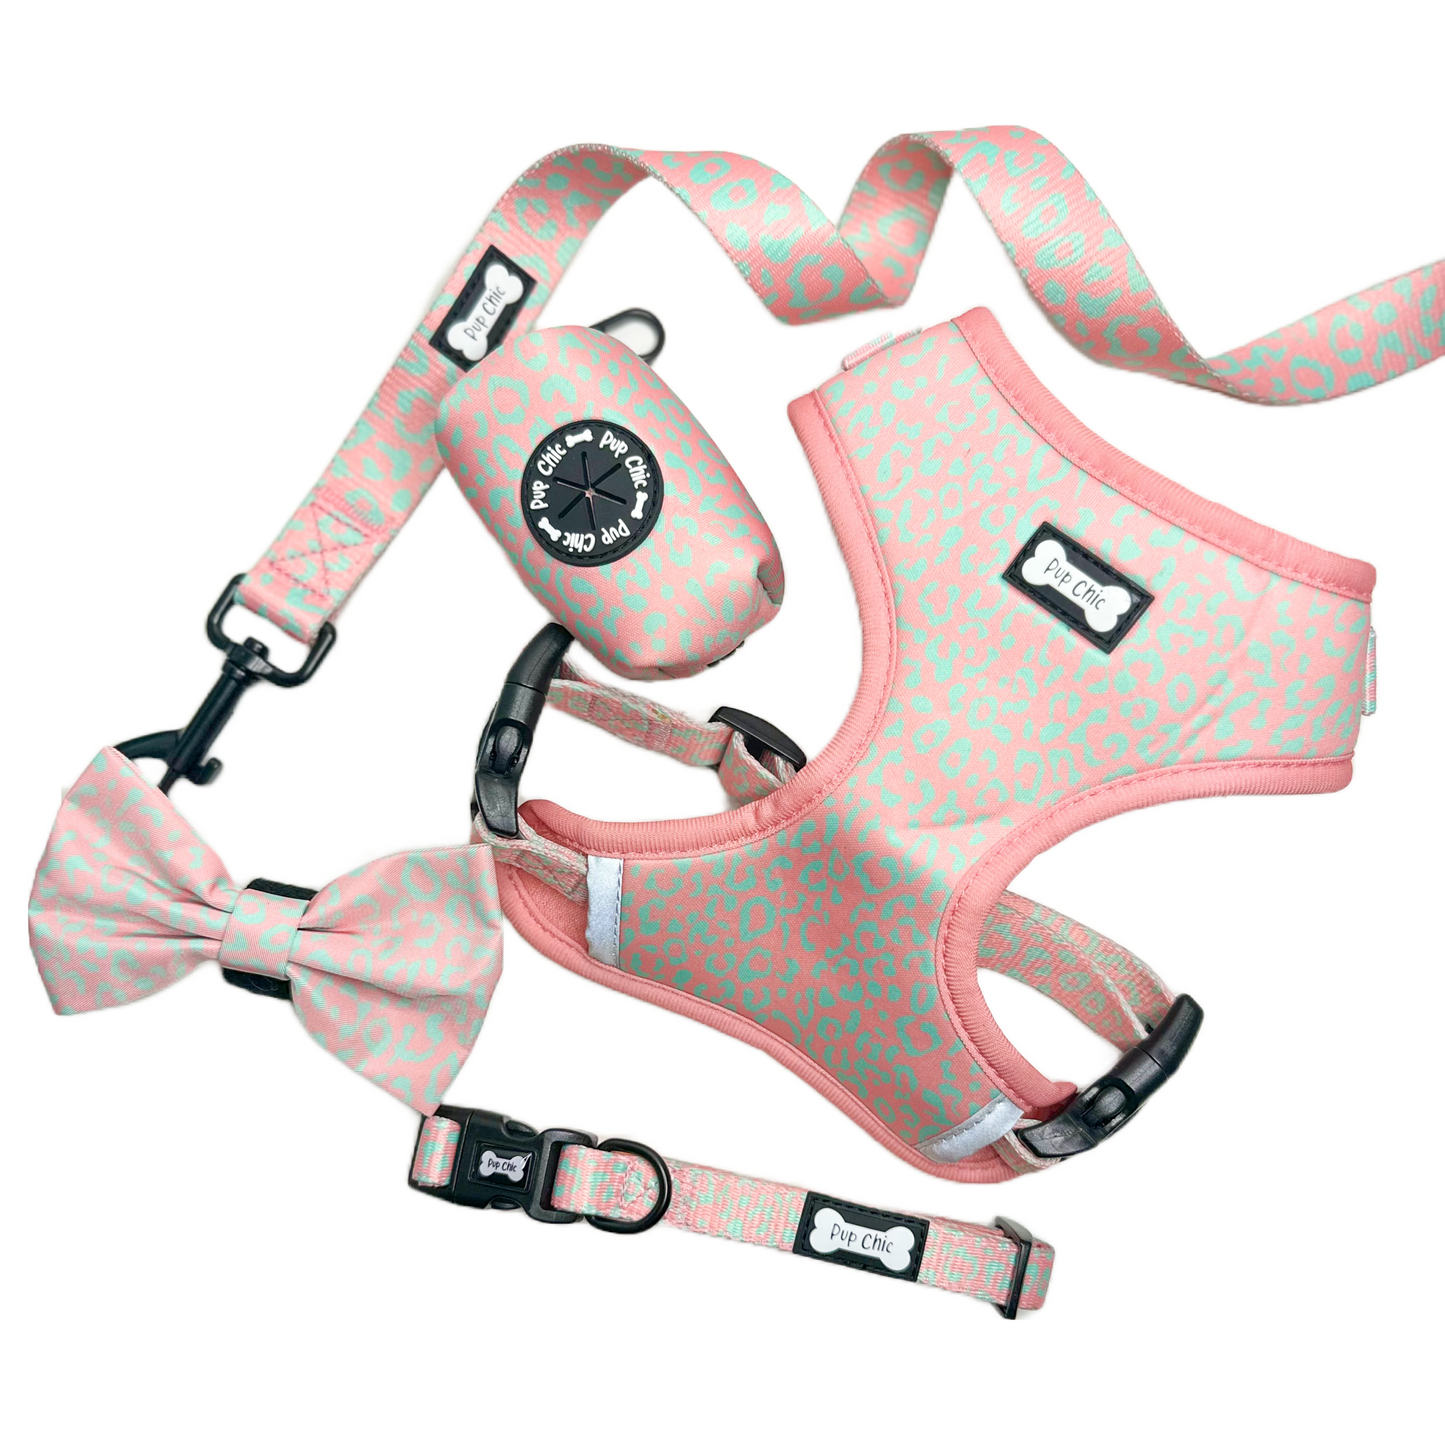 Wild Chic Adjustable Harness - animal print dog harness